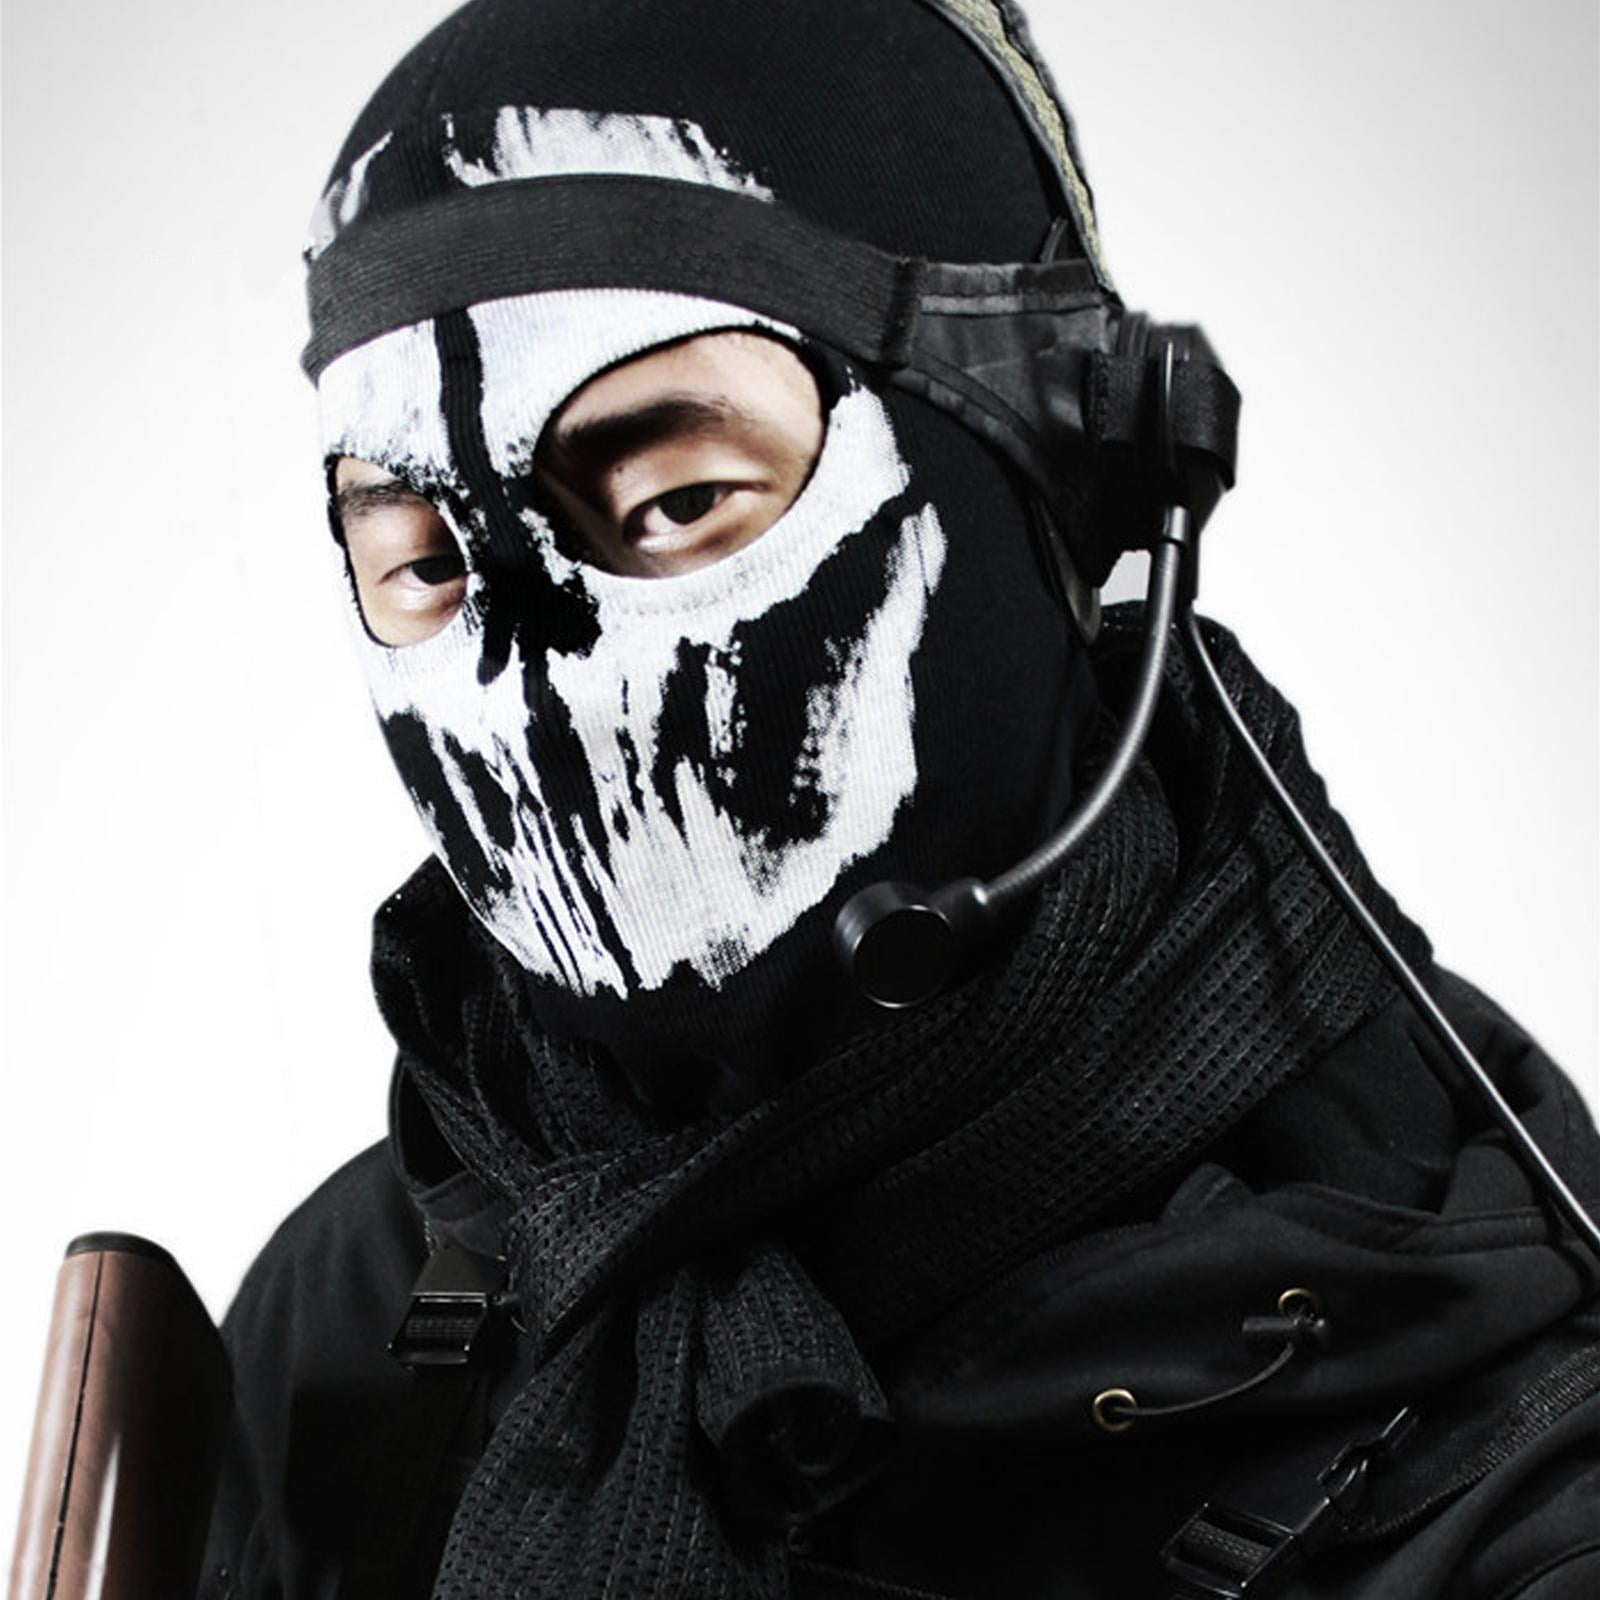 Black Balaclava Ghost Mask Call of Duty Ghost Mask Windproof Warm